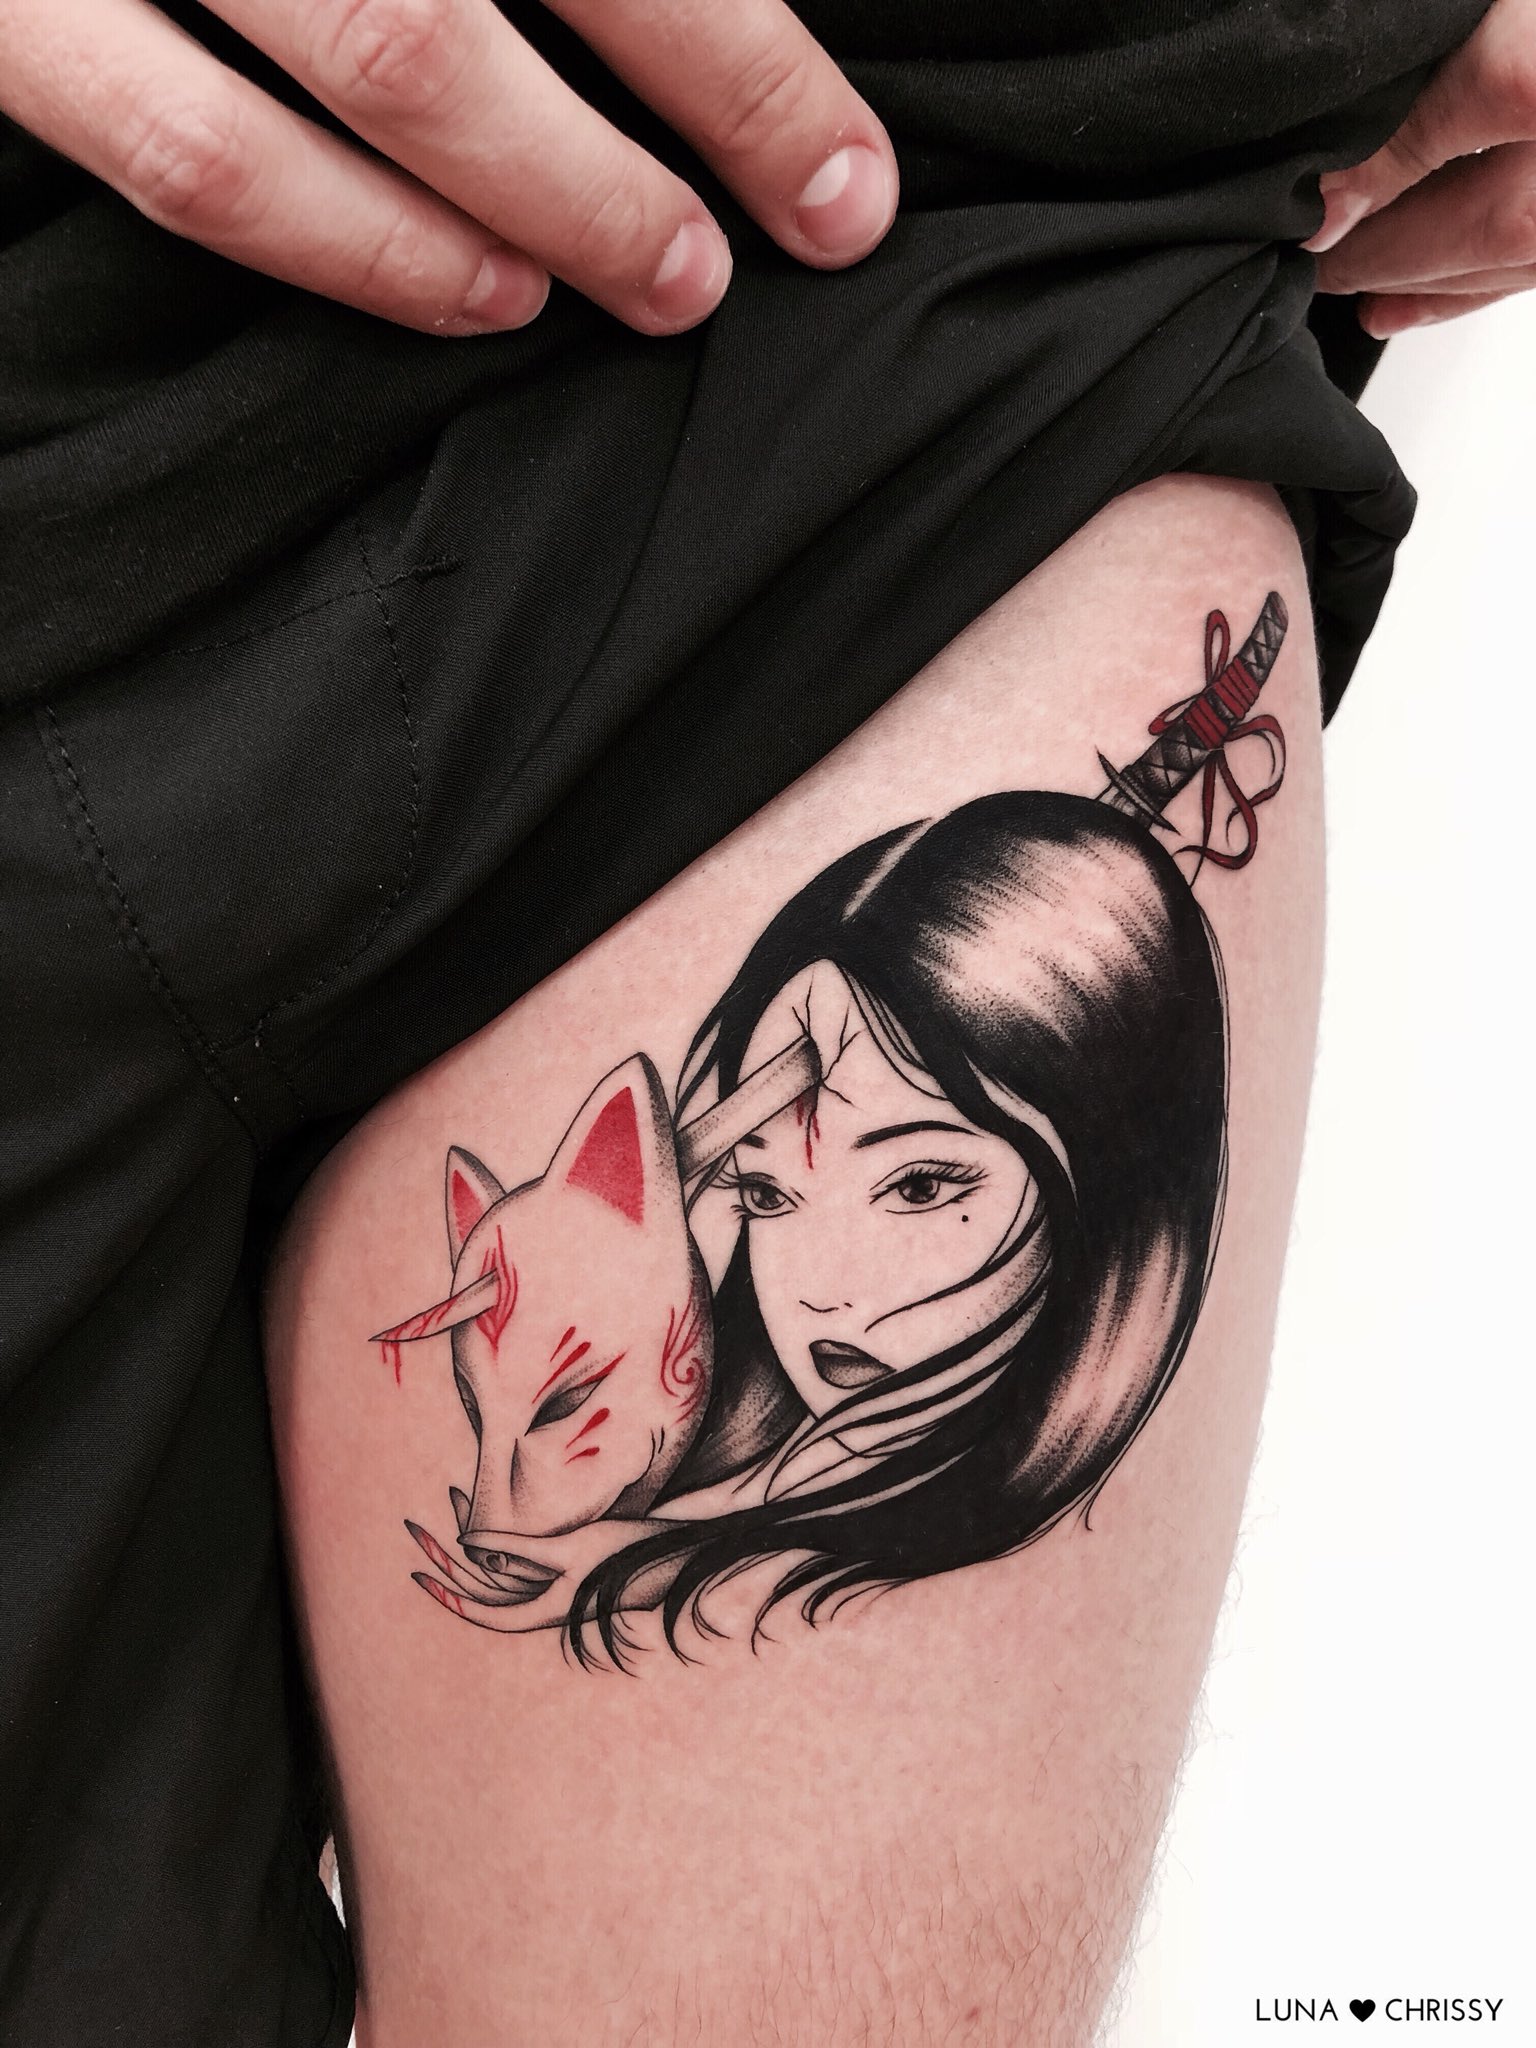 Kitsune Tattoo Meanings Explained  10 Popular Designs